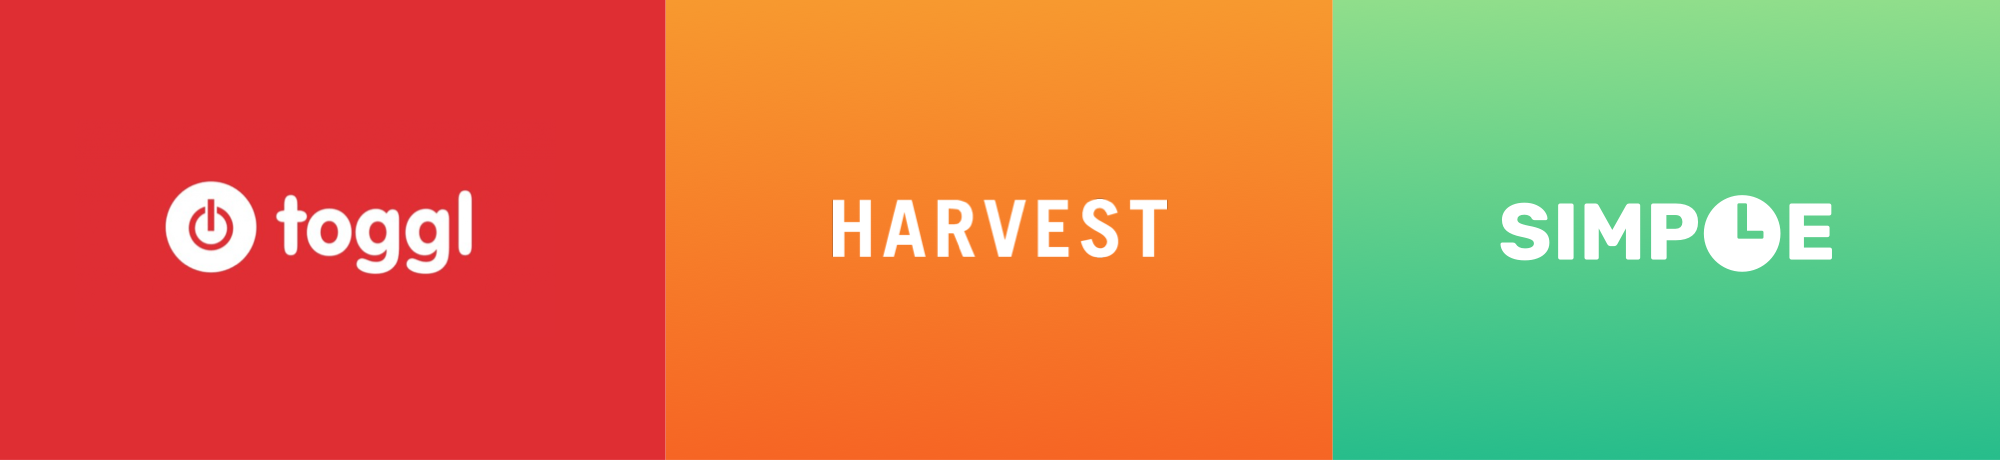 Toggl vs Harvest - Features comparison 2020